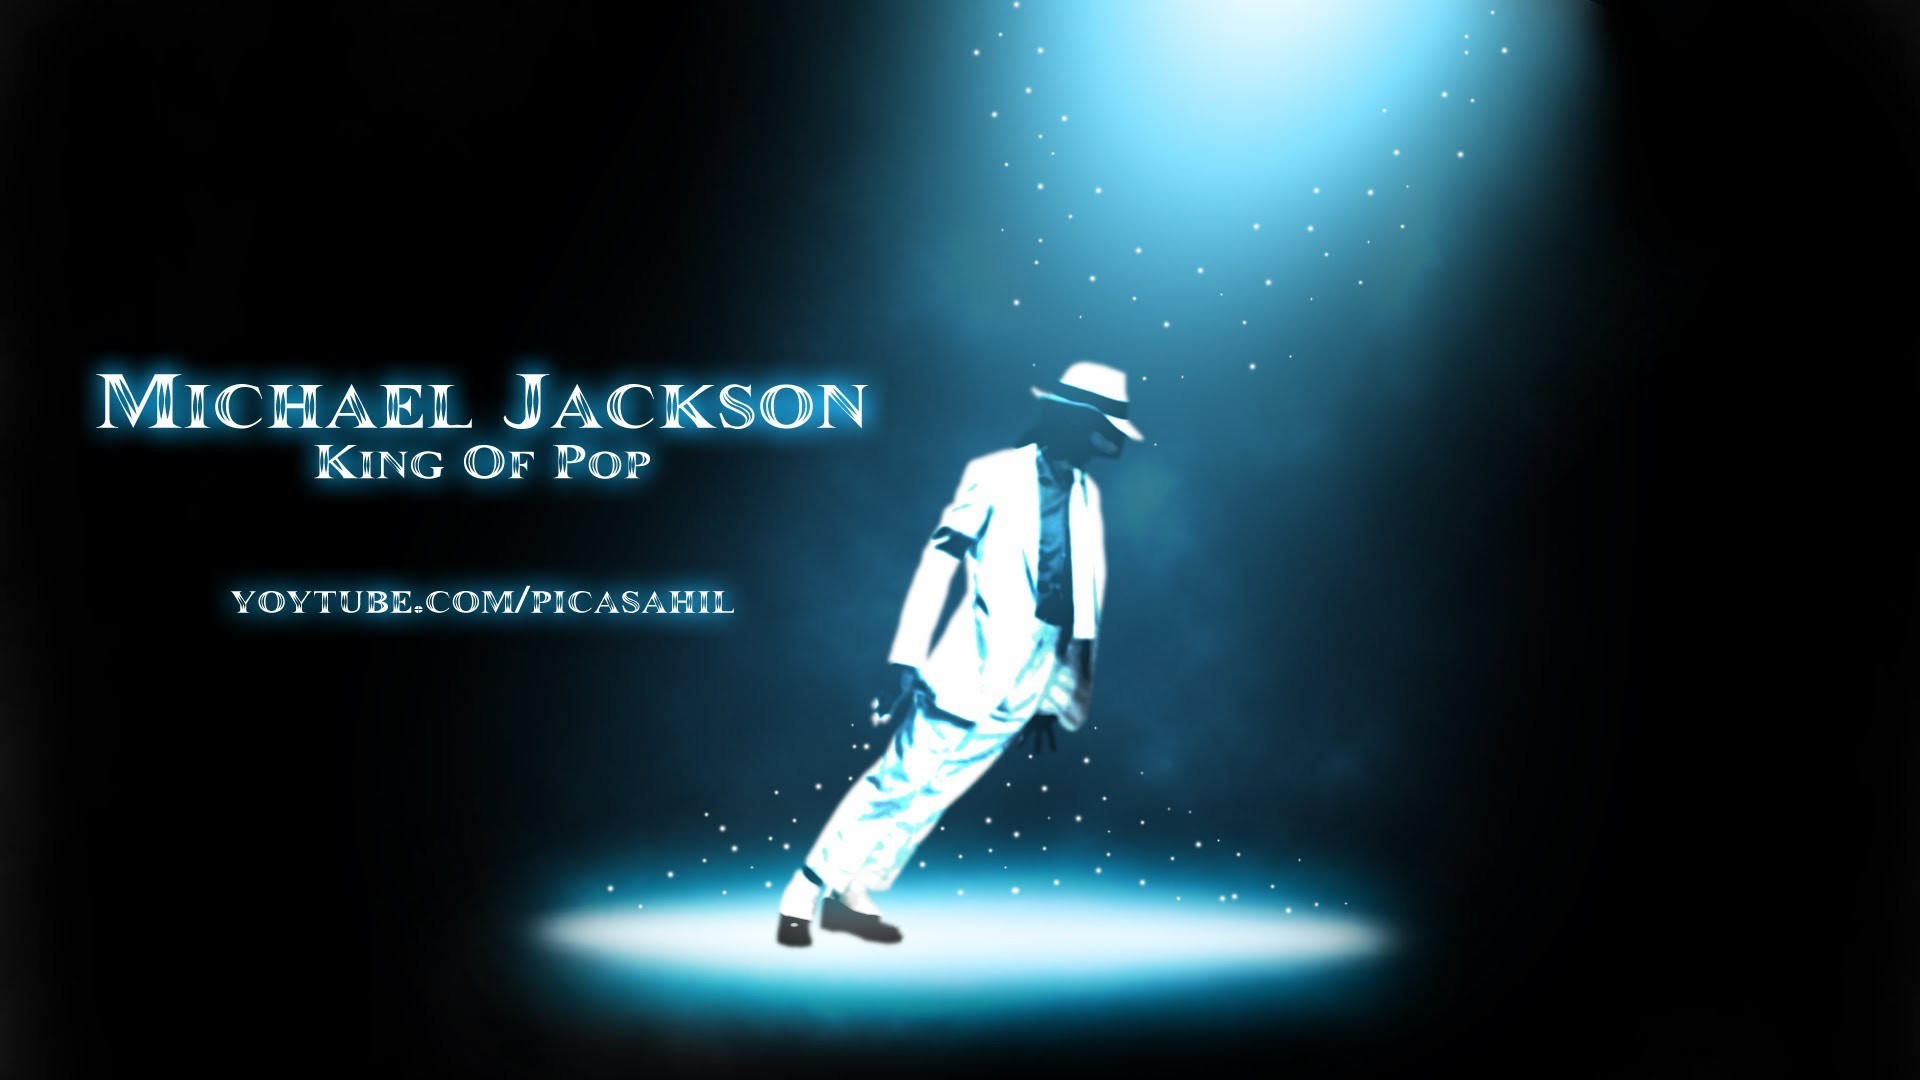 1920x1080 Michael Jackson Wallpaper 4 by Maxoooow on DeviantArt Michael Jackson  images Michael Jackson SMOOTH CRIMINAL HD .